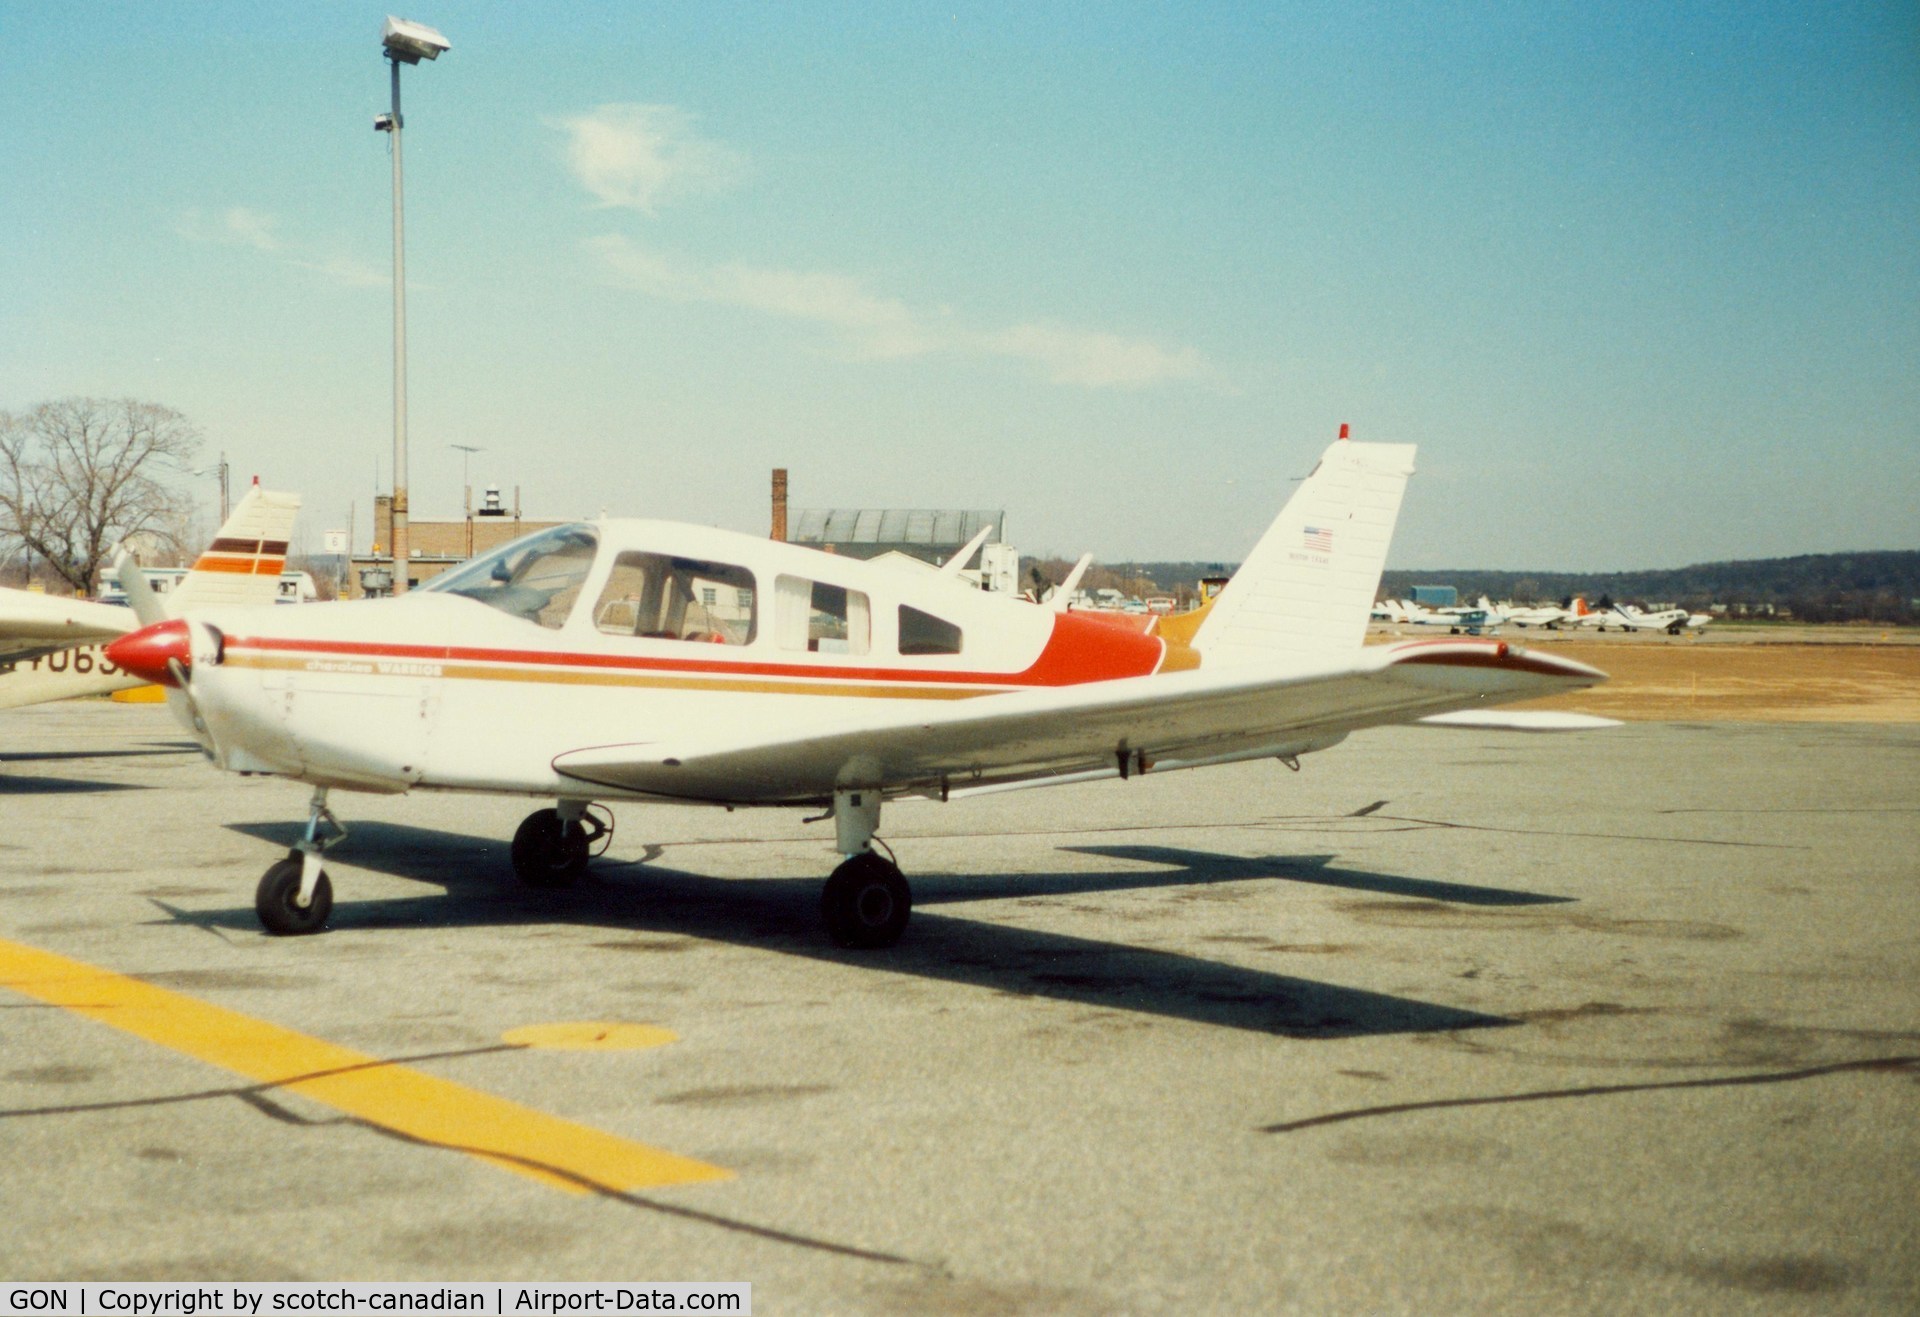 Groton-new London Airport (GON) - Piper PA-28-161 Cherokee Warrior parked at Groton-New London Airport, New London, CT - circa 1980's